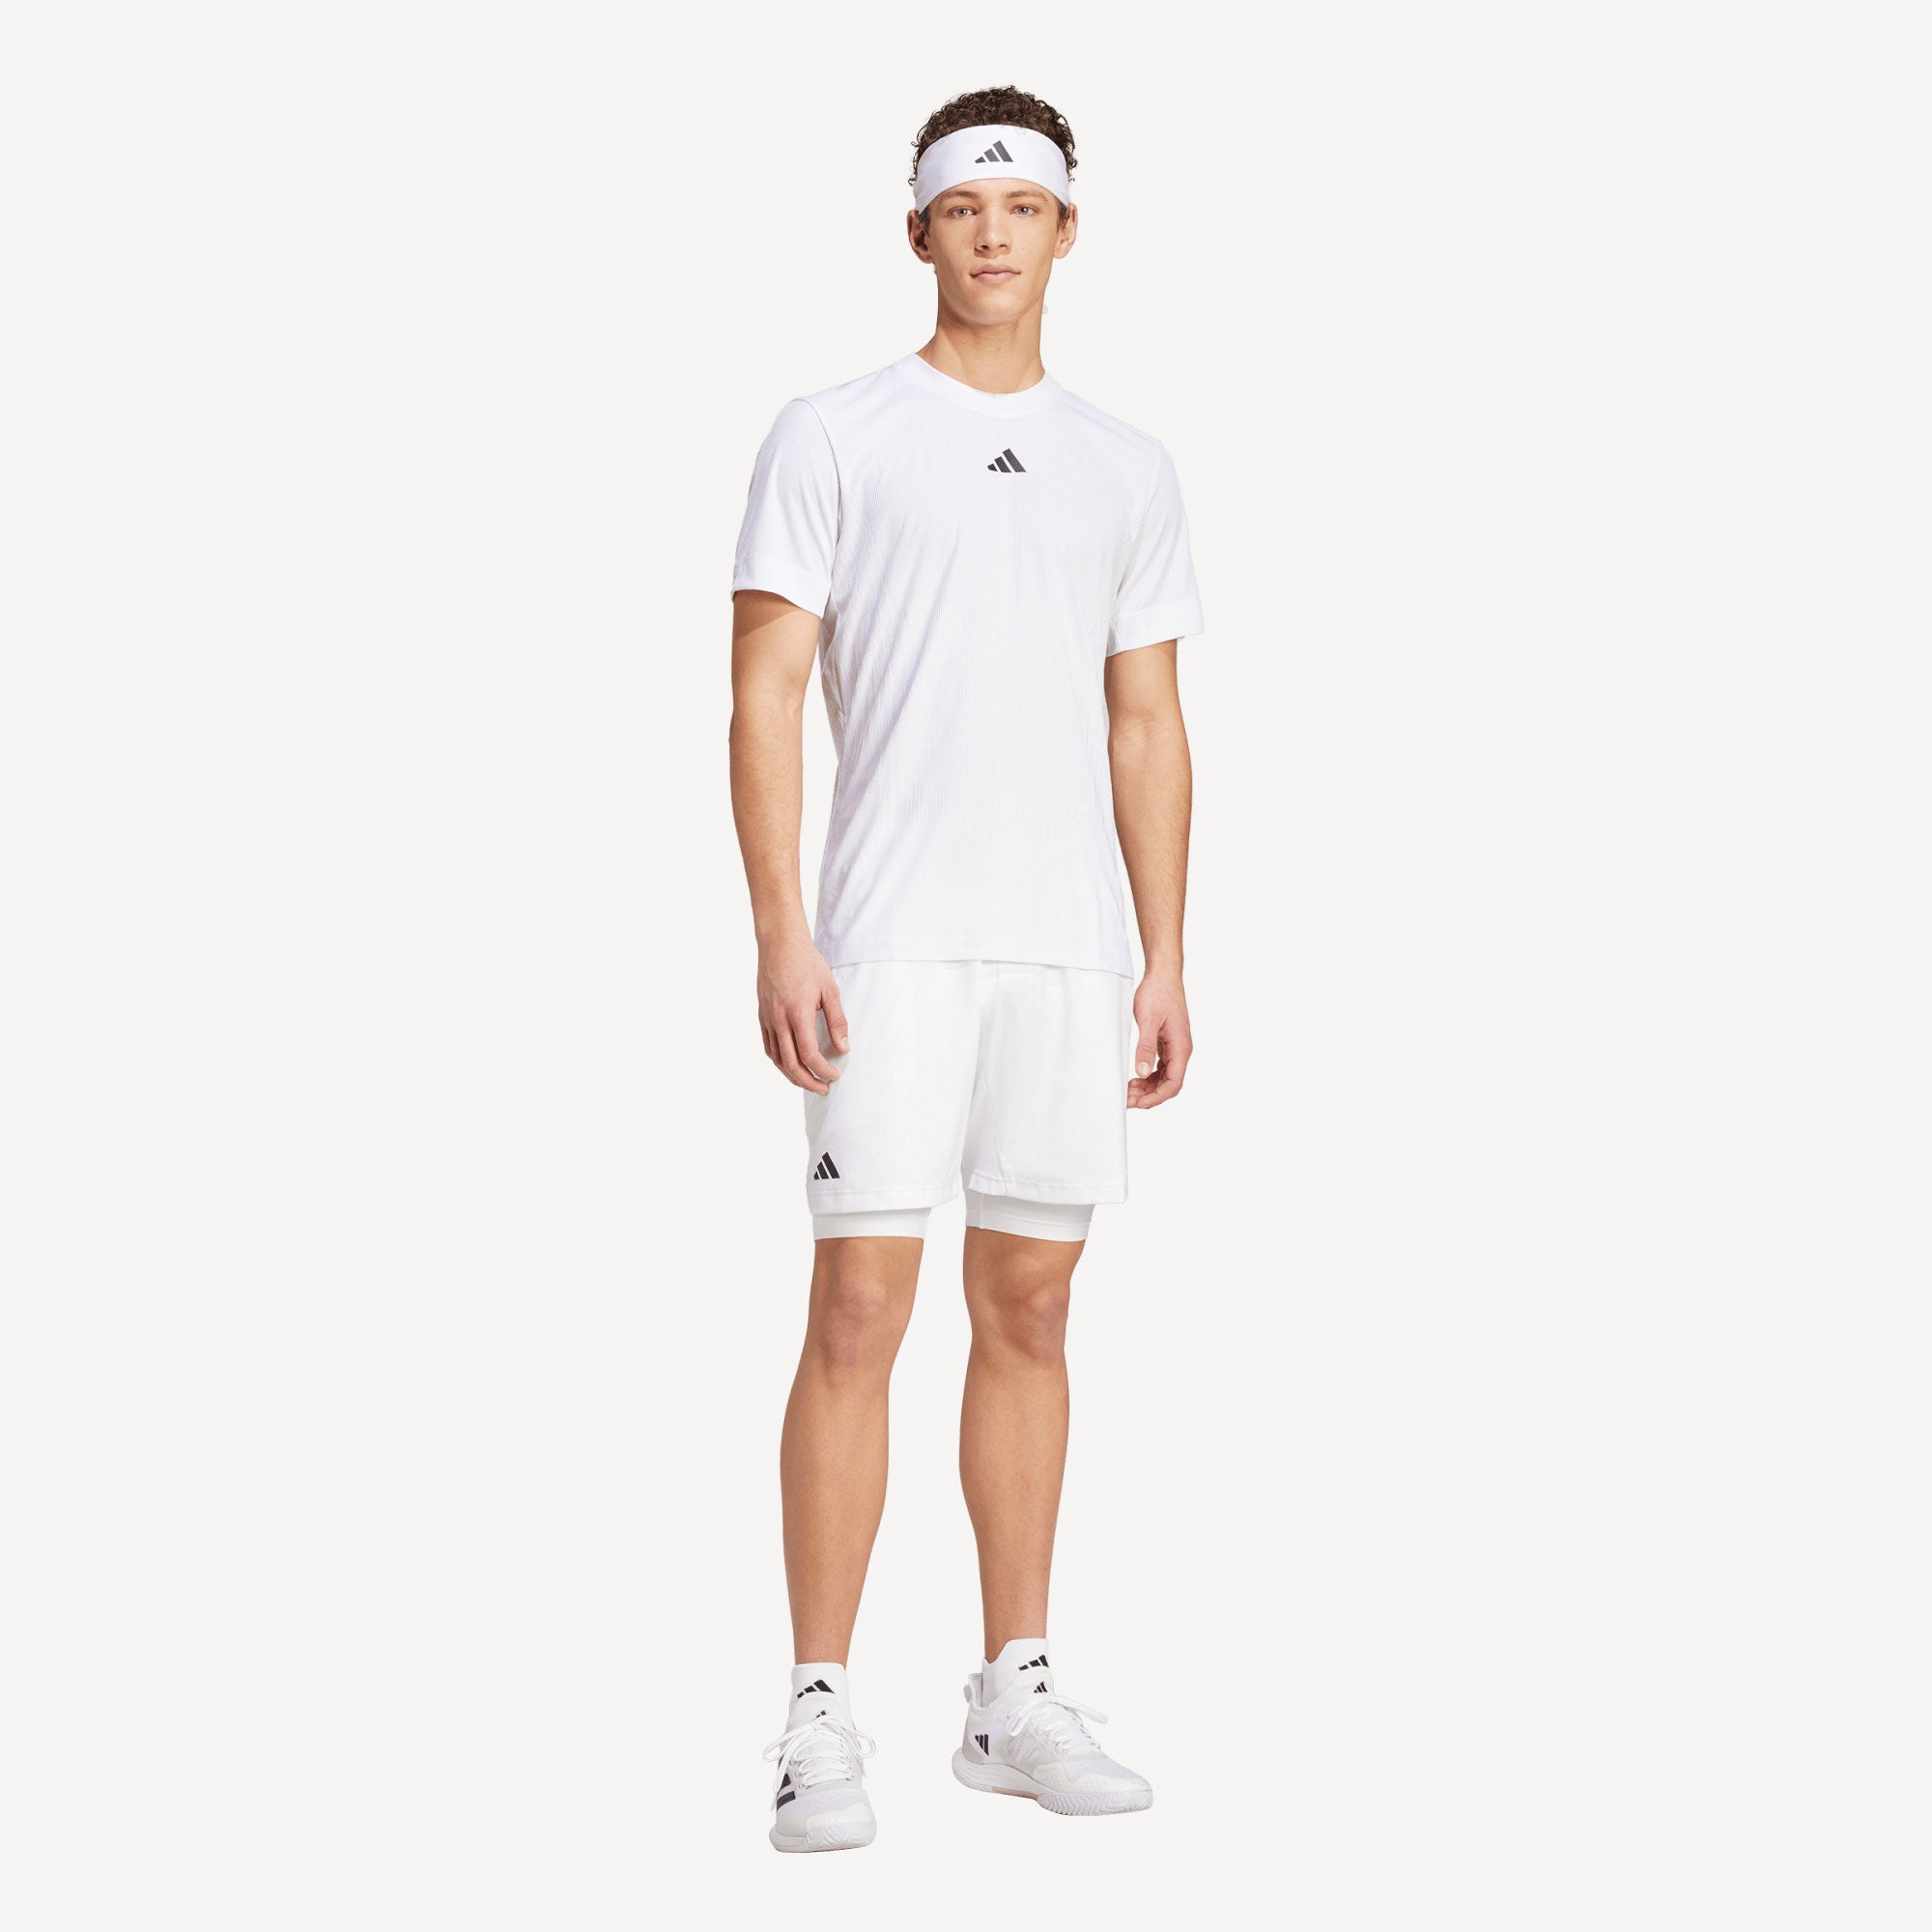 adidas Pro London Men's Airchill Tennis Shirt - White (4)